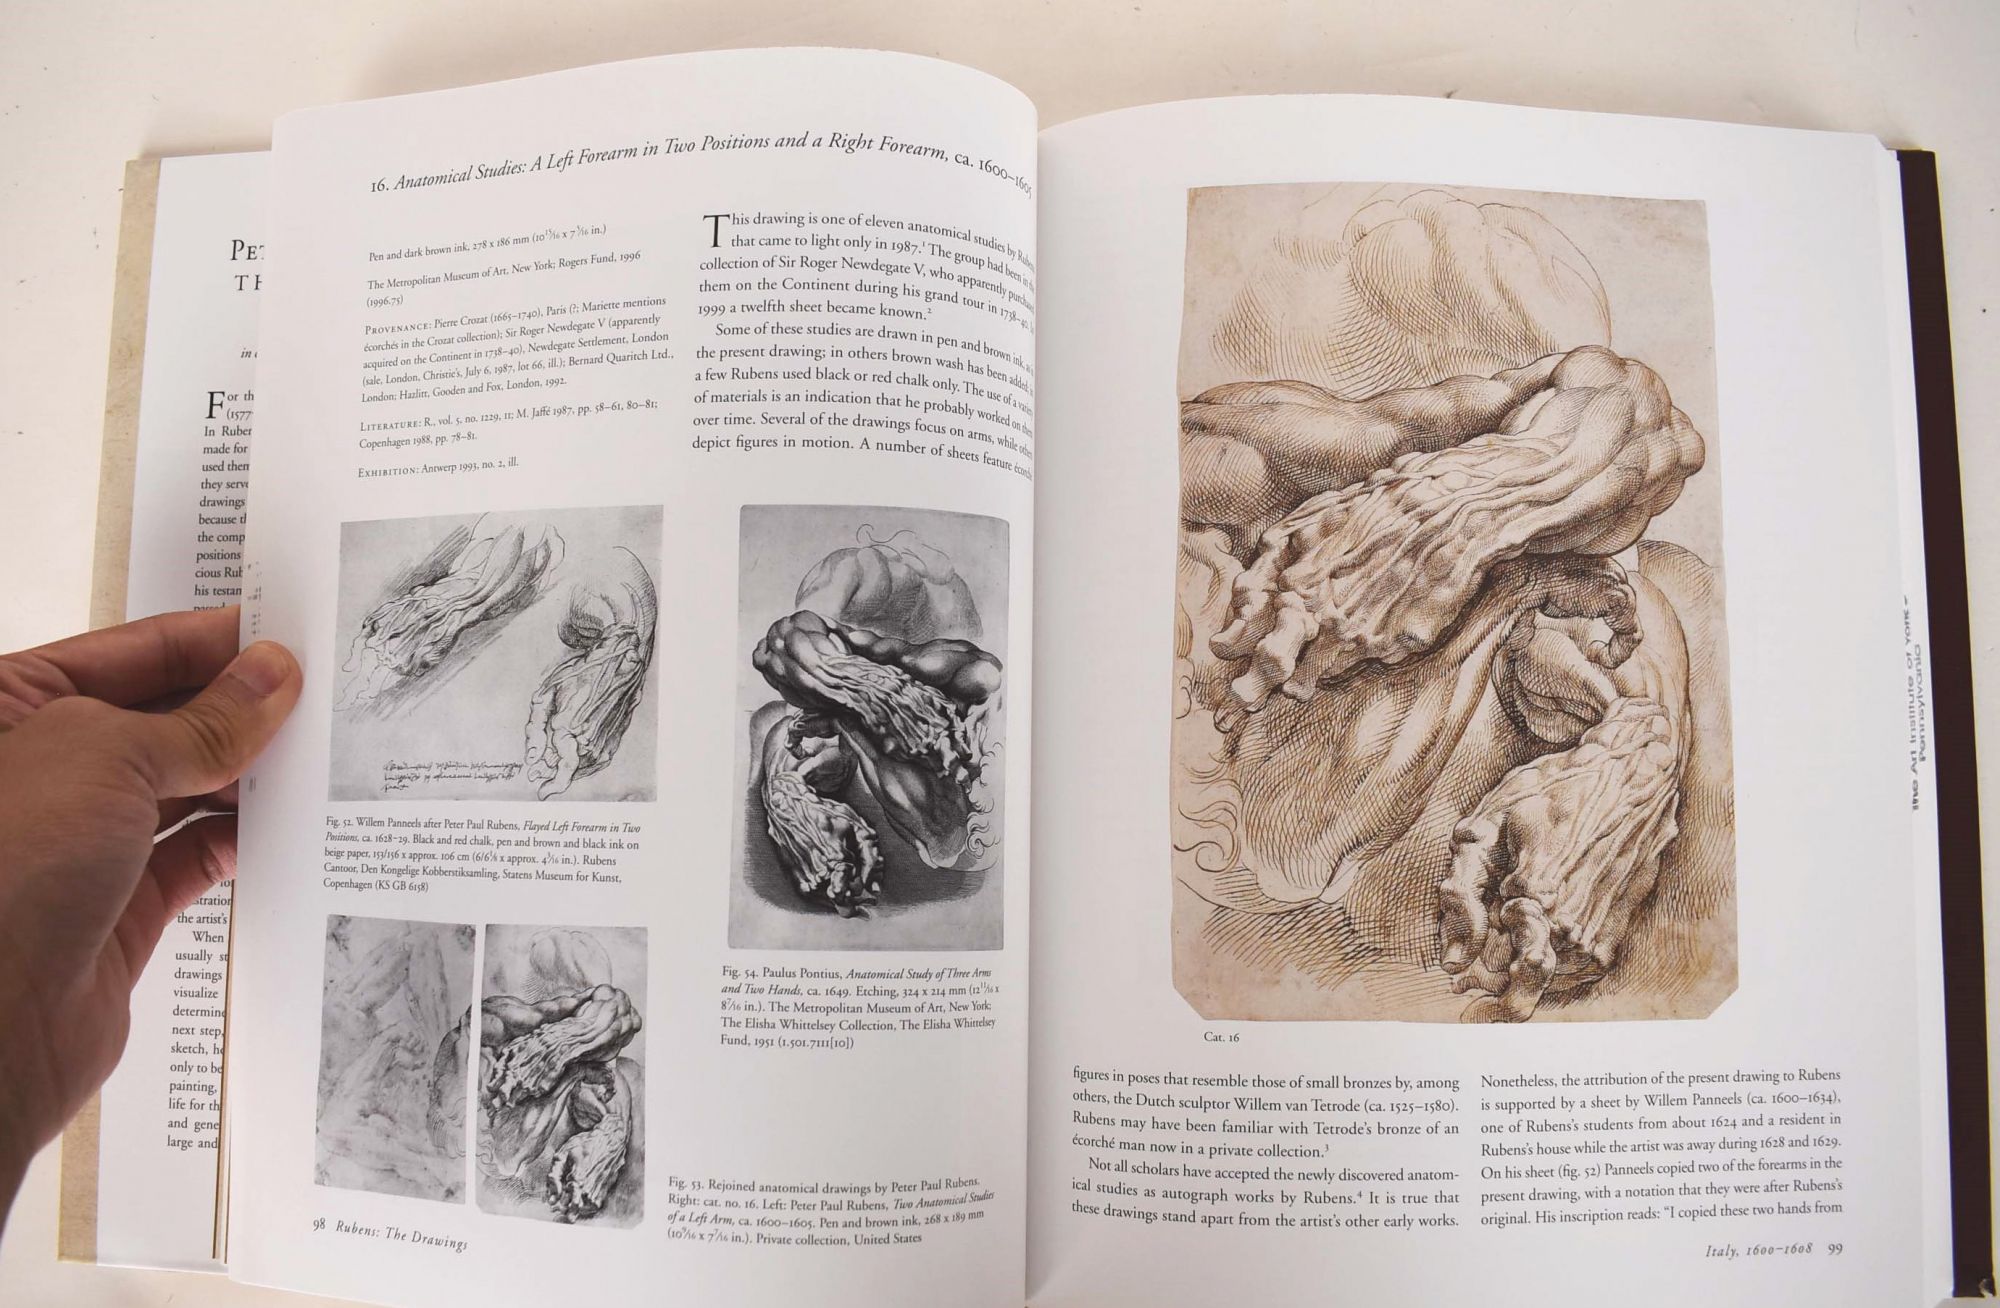 Peter Paul Rubens Drawings: Ecorche Nude Male Study - Fine Art Prints | eBay